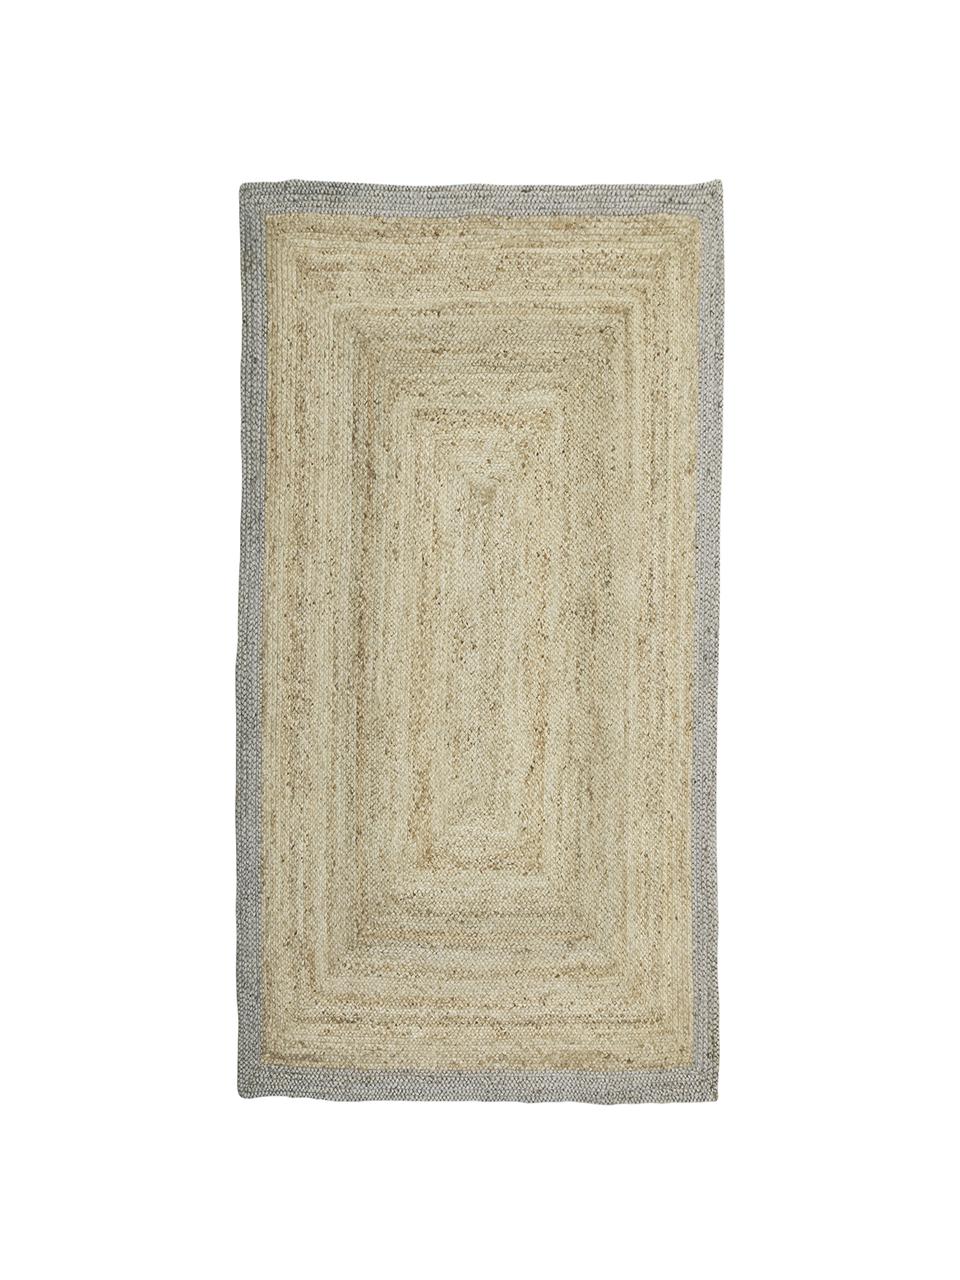 Handgefertigter Jute-Teppich Shanta mit grauem Rand, 100% Jute, Beige, Grau, B 80 x L 150 cm (Größe XS)